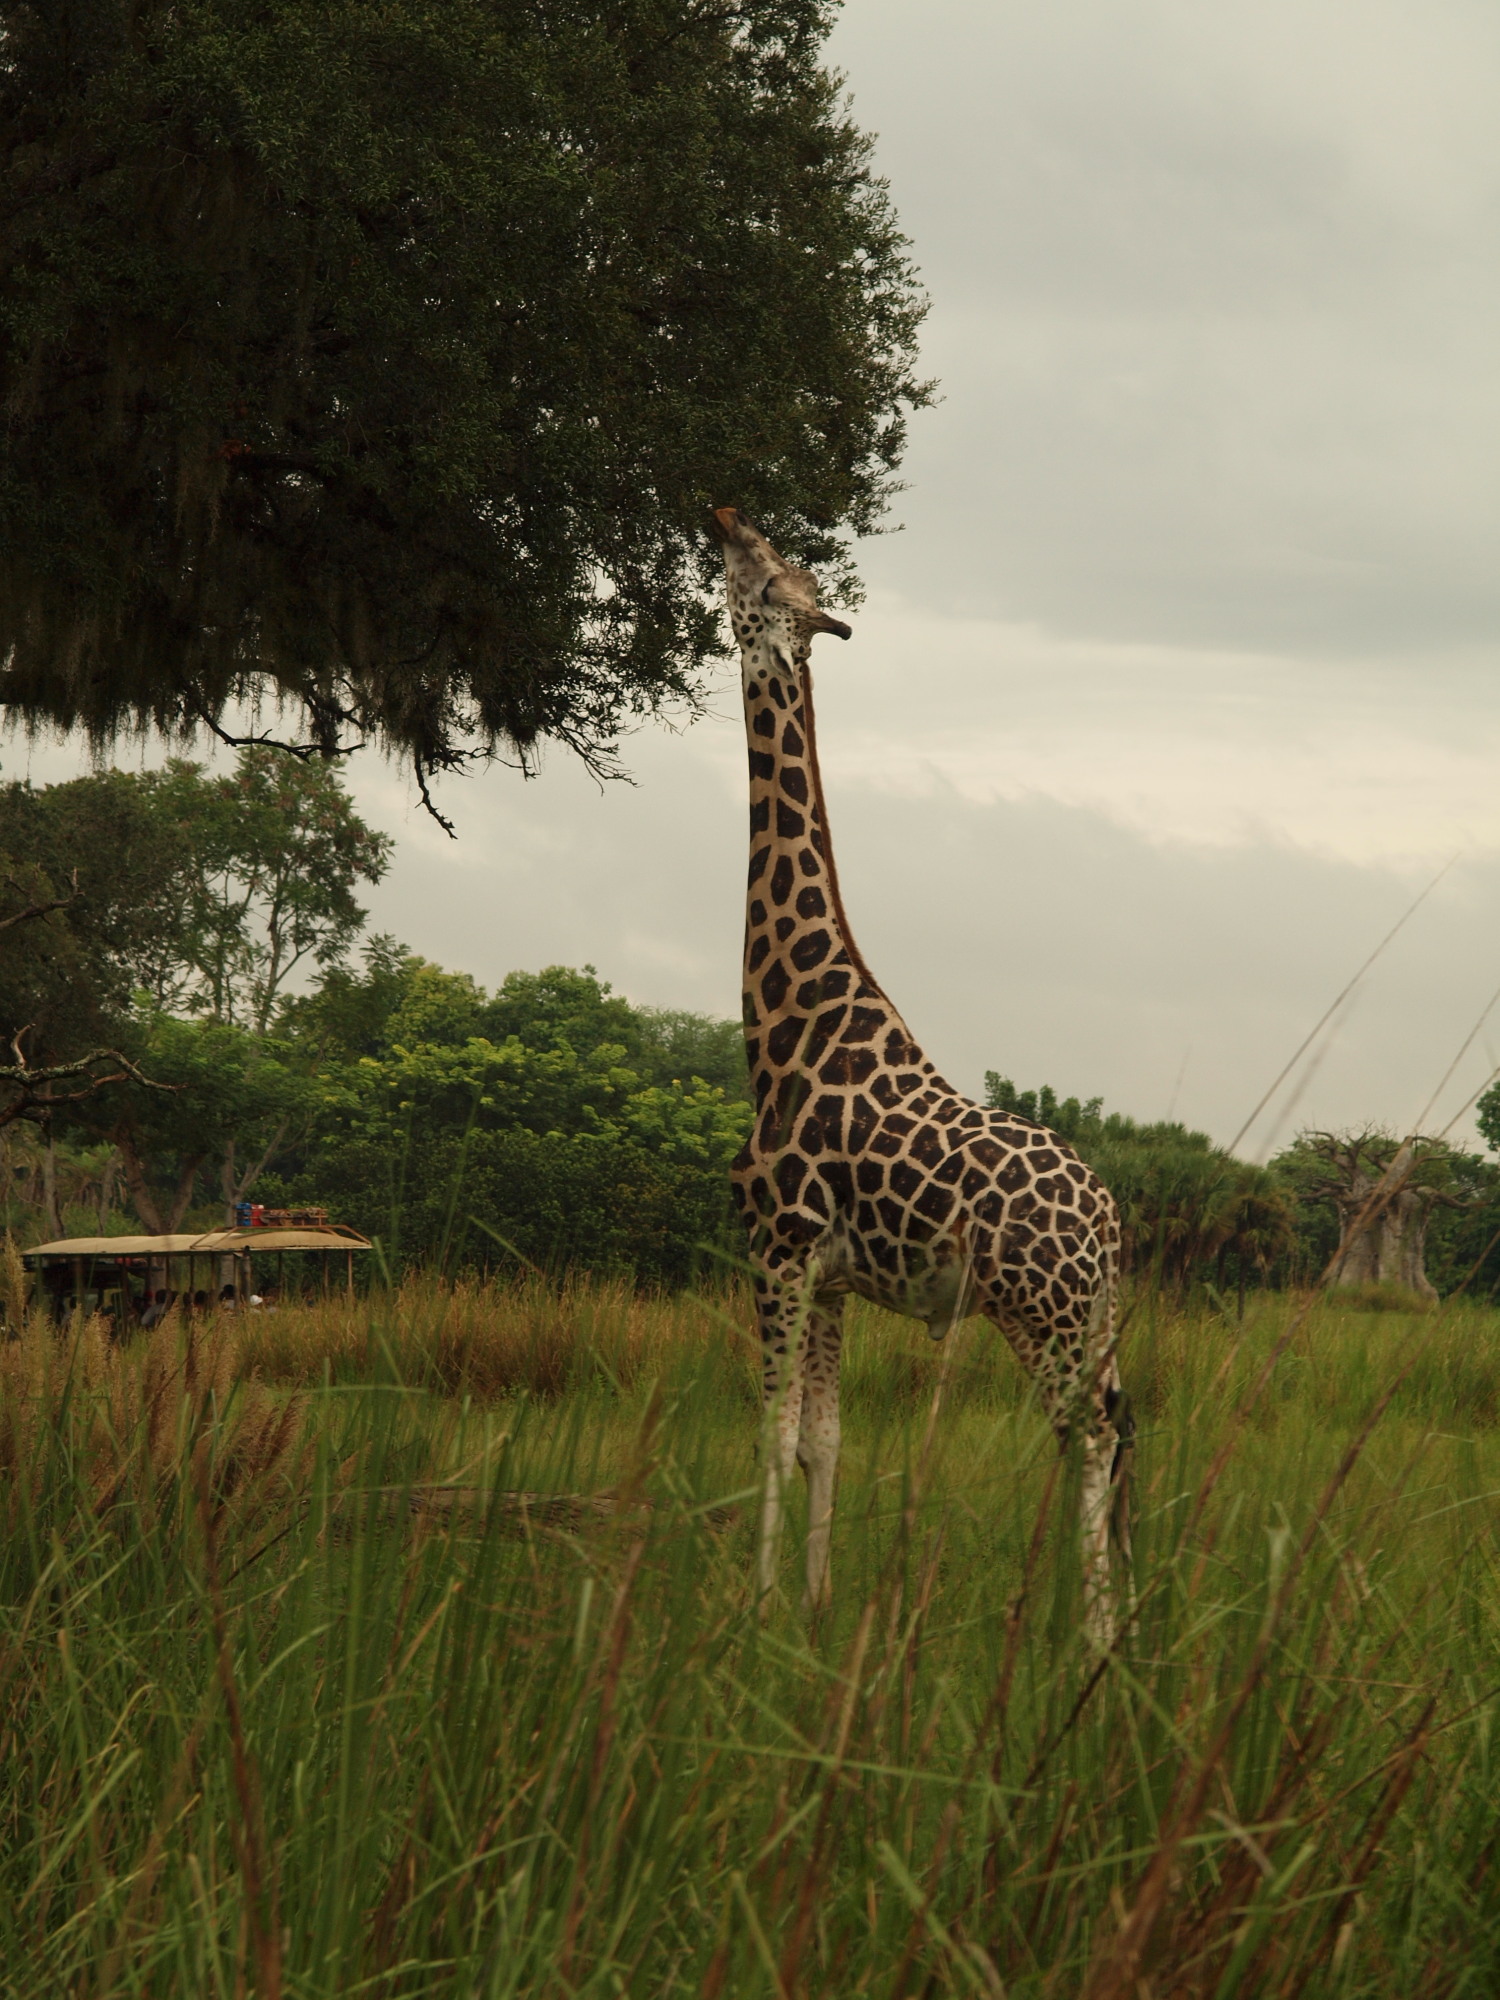 Animal Kingdom - Kilimanjaro Safaris - Giraffe